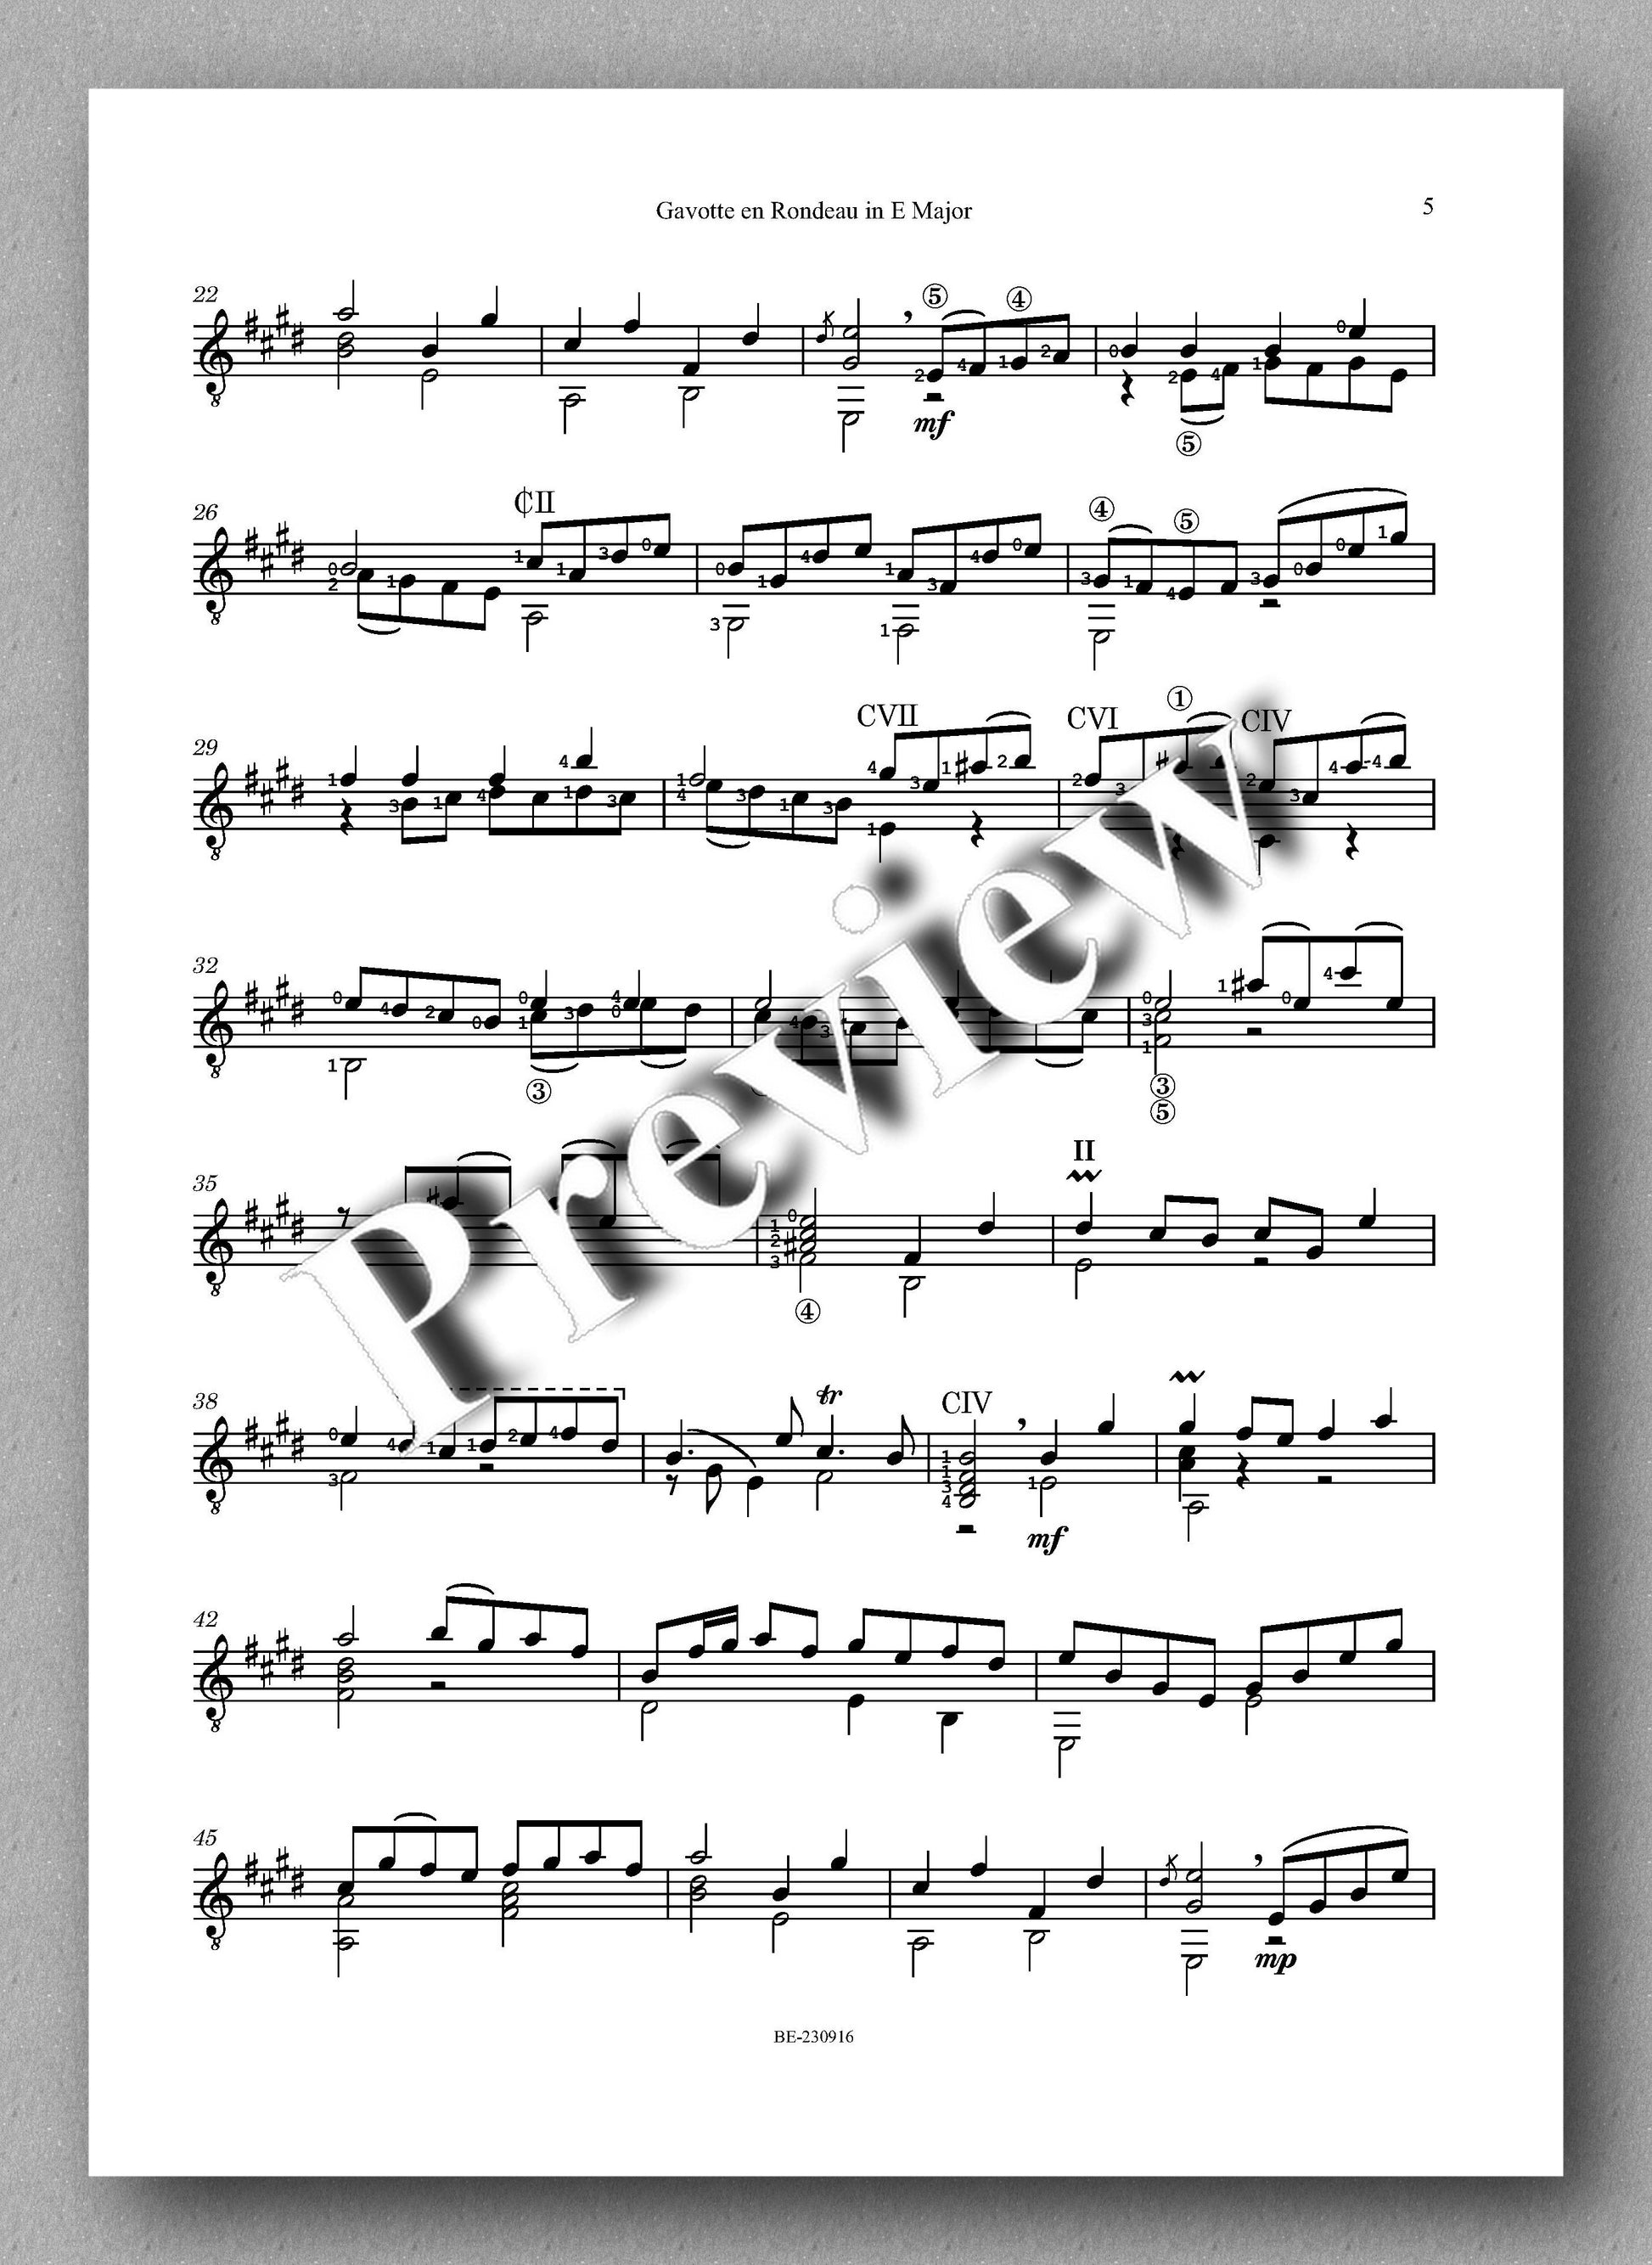 J.S.Bach, Gavotte en Rondeau in E Major, BWV 1006 - preview of the music score 2